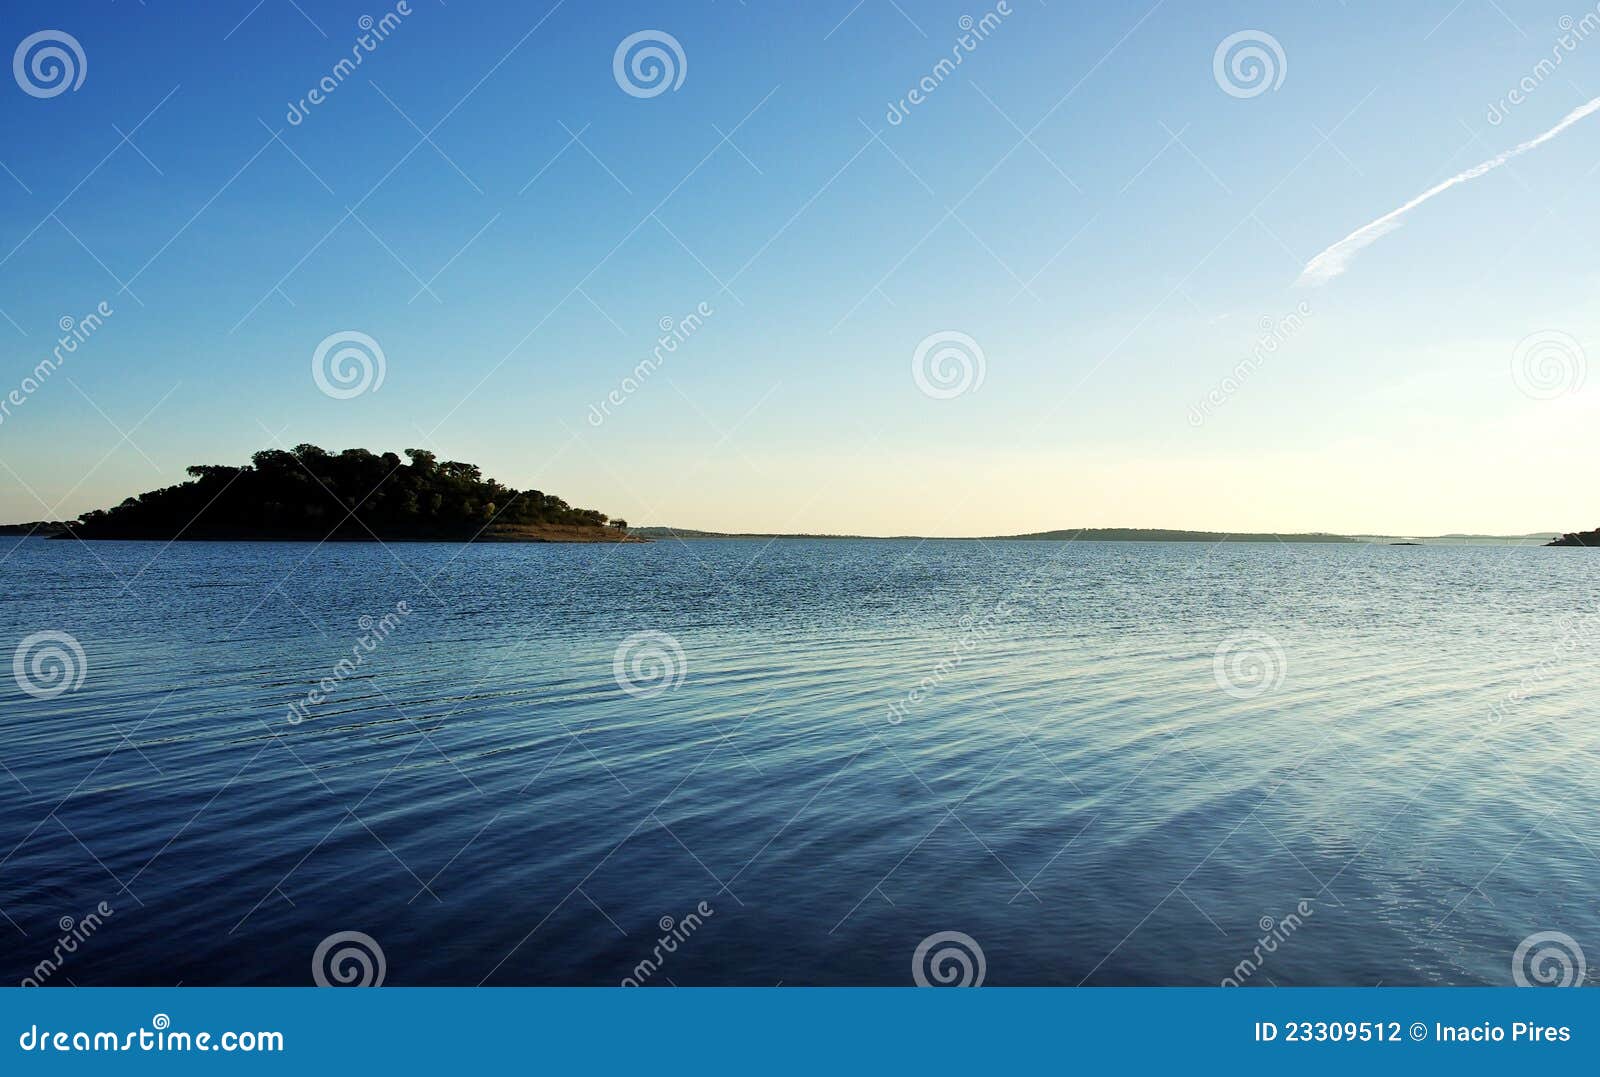 island in alqueva lake